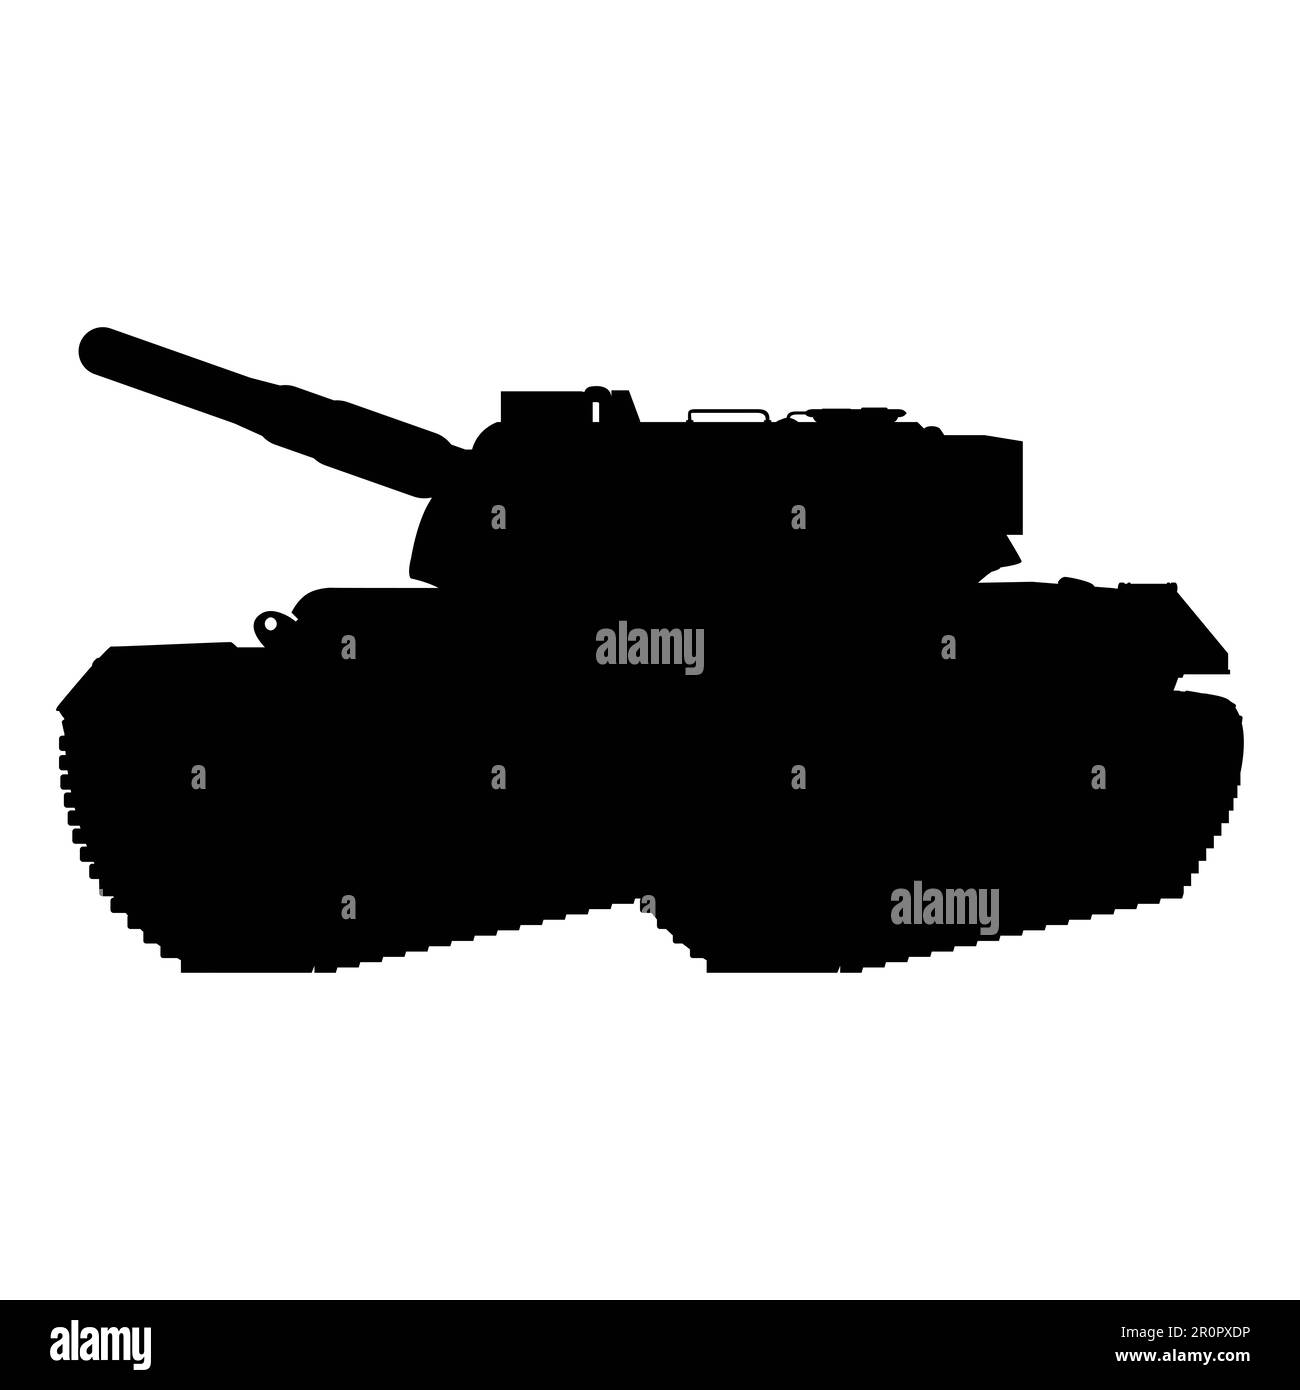 German Leopard I main battle tank silhouette style. Military vehicle. Illustration isolated on white background. Stock Photo